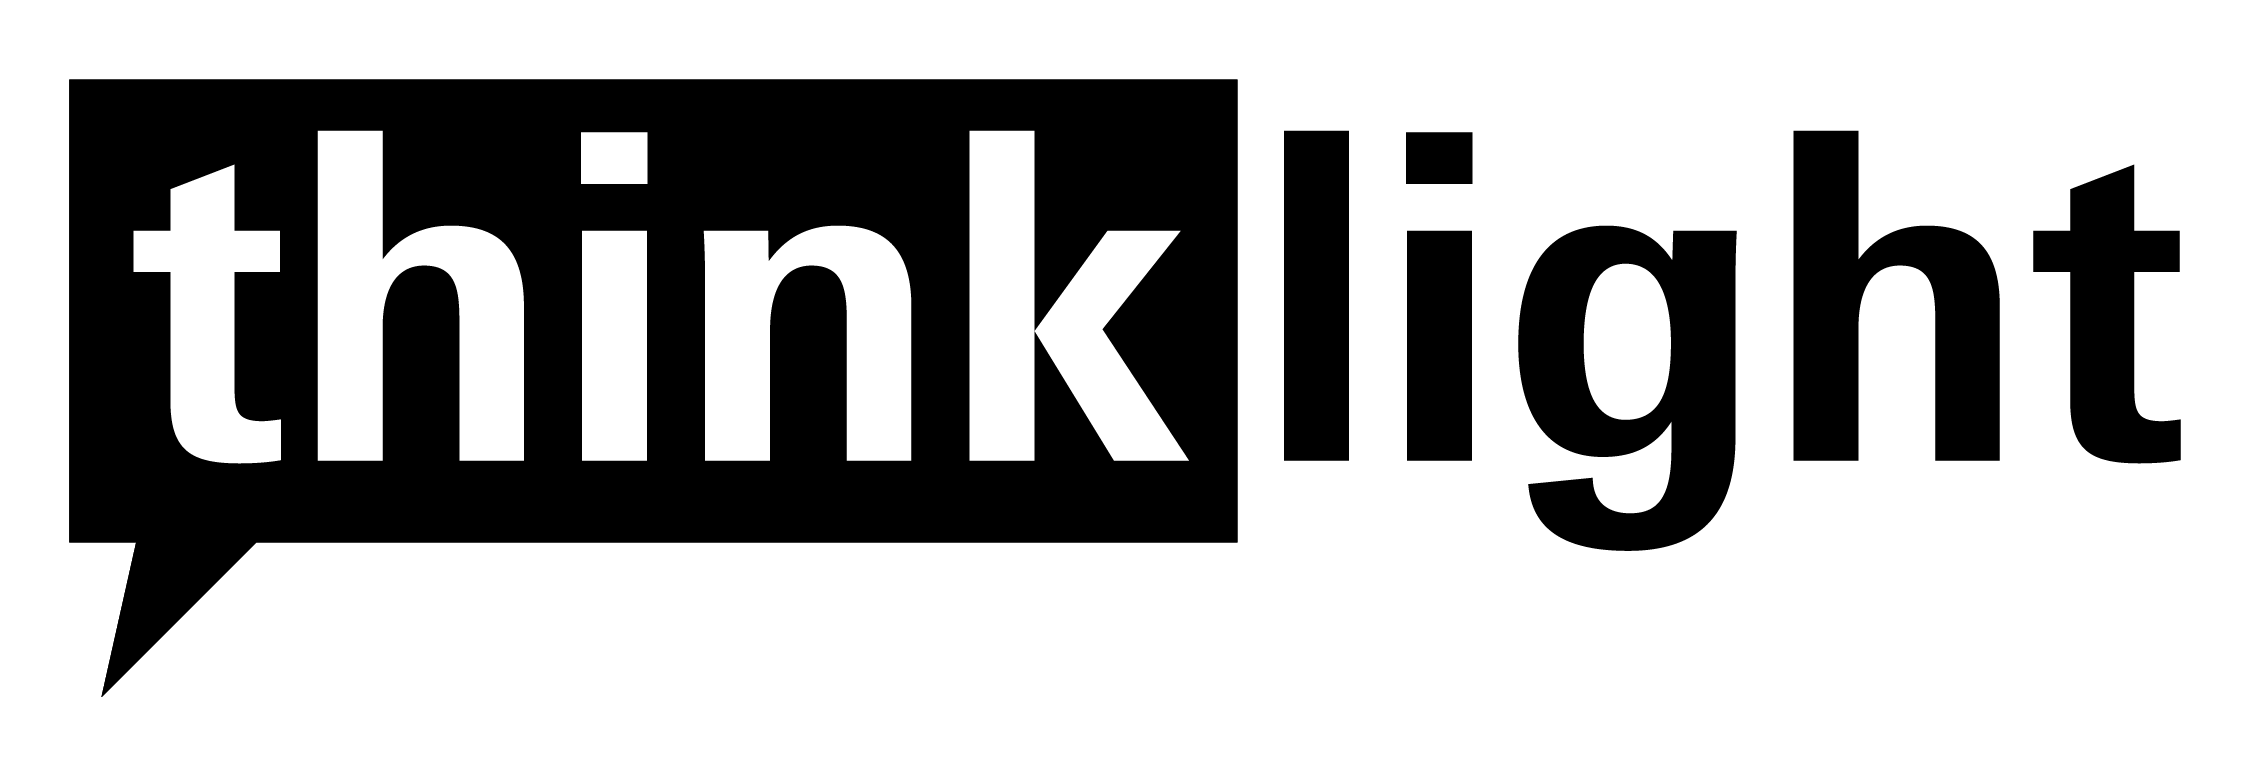 Thinklight logo